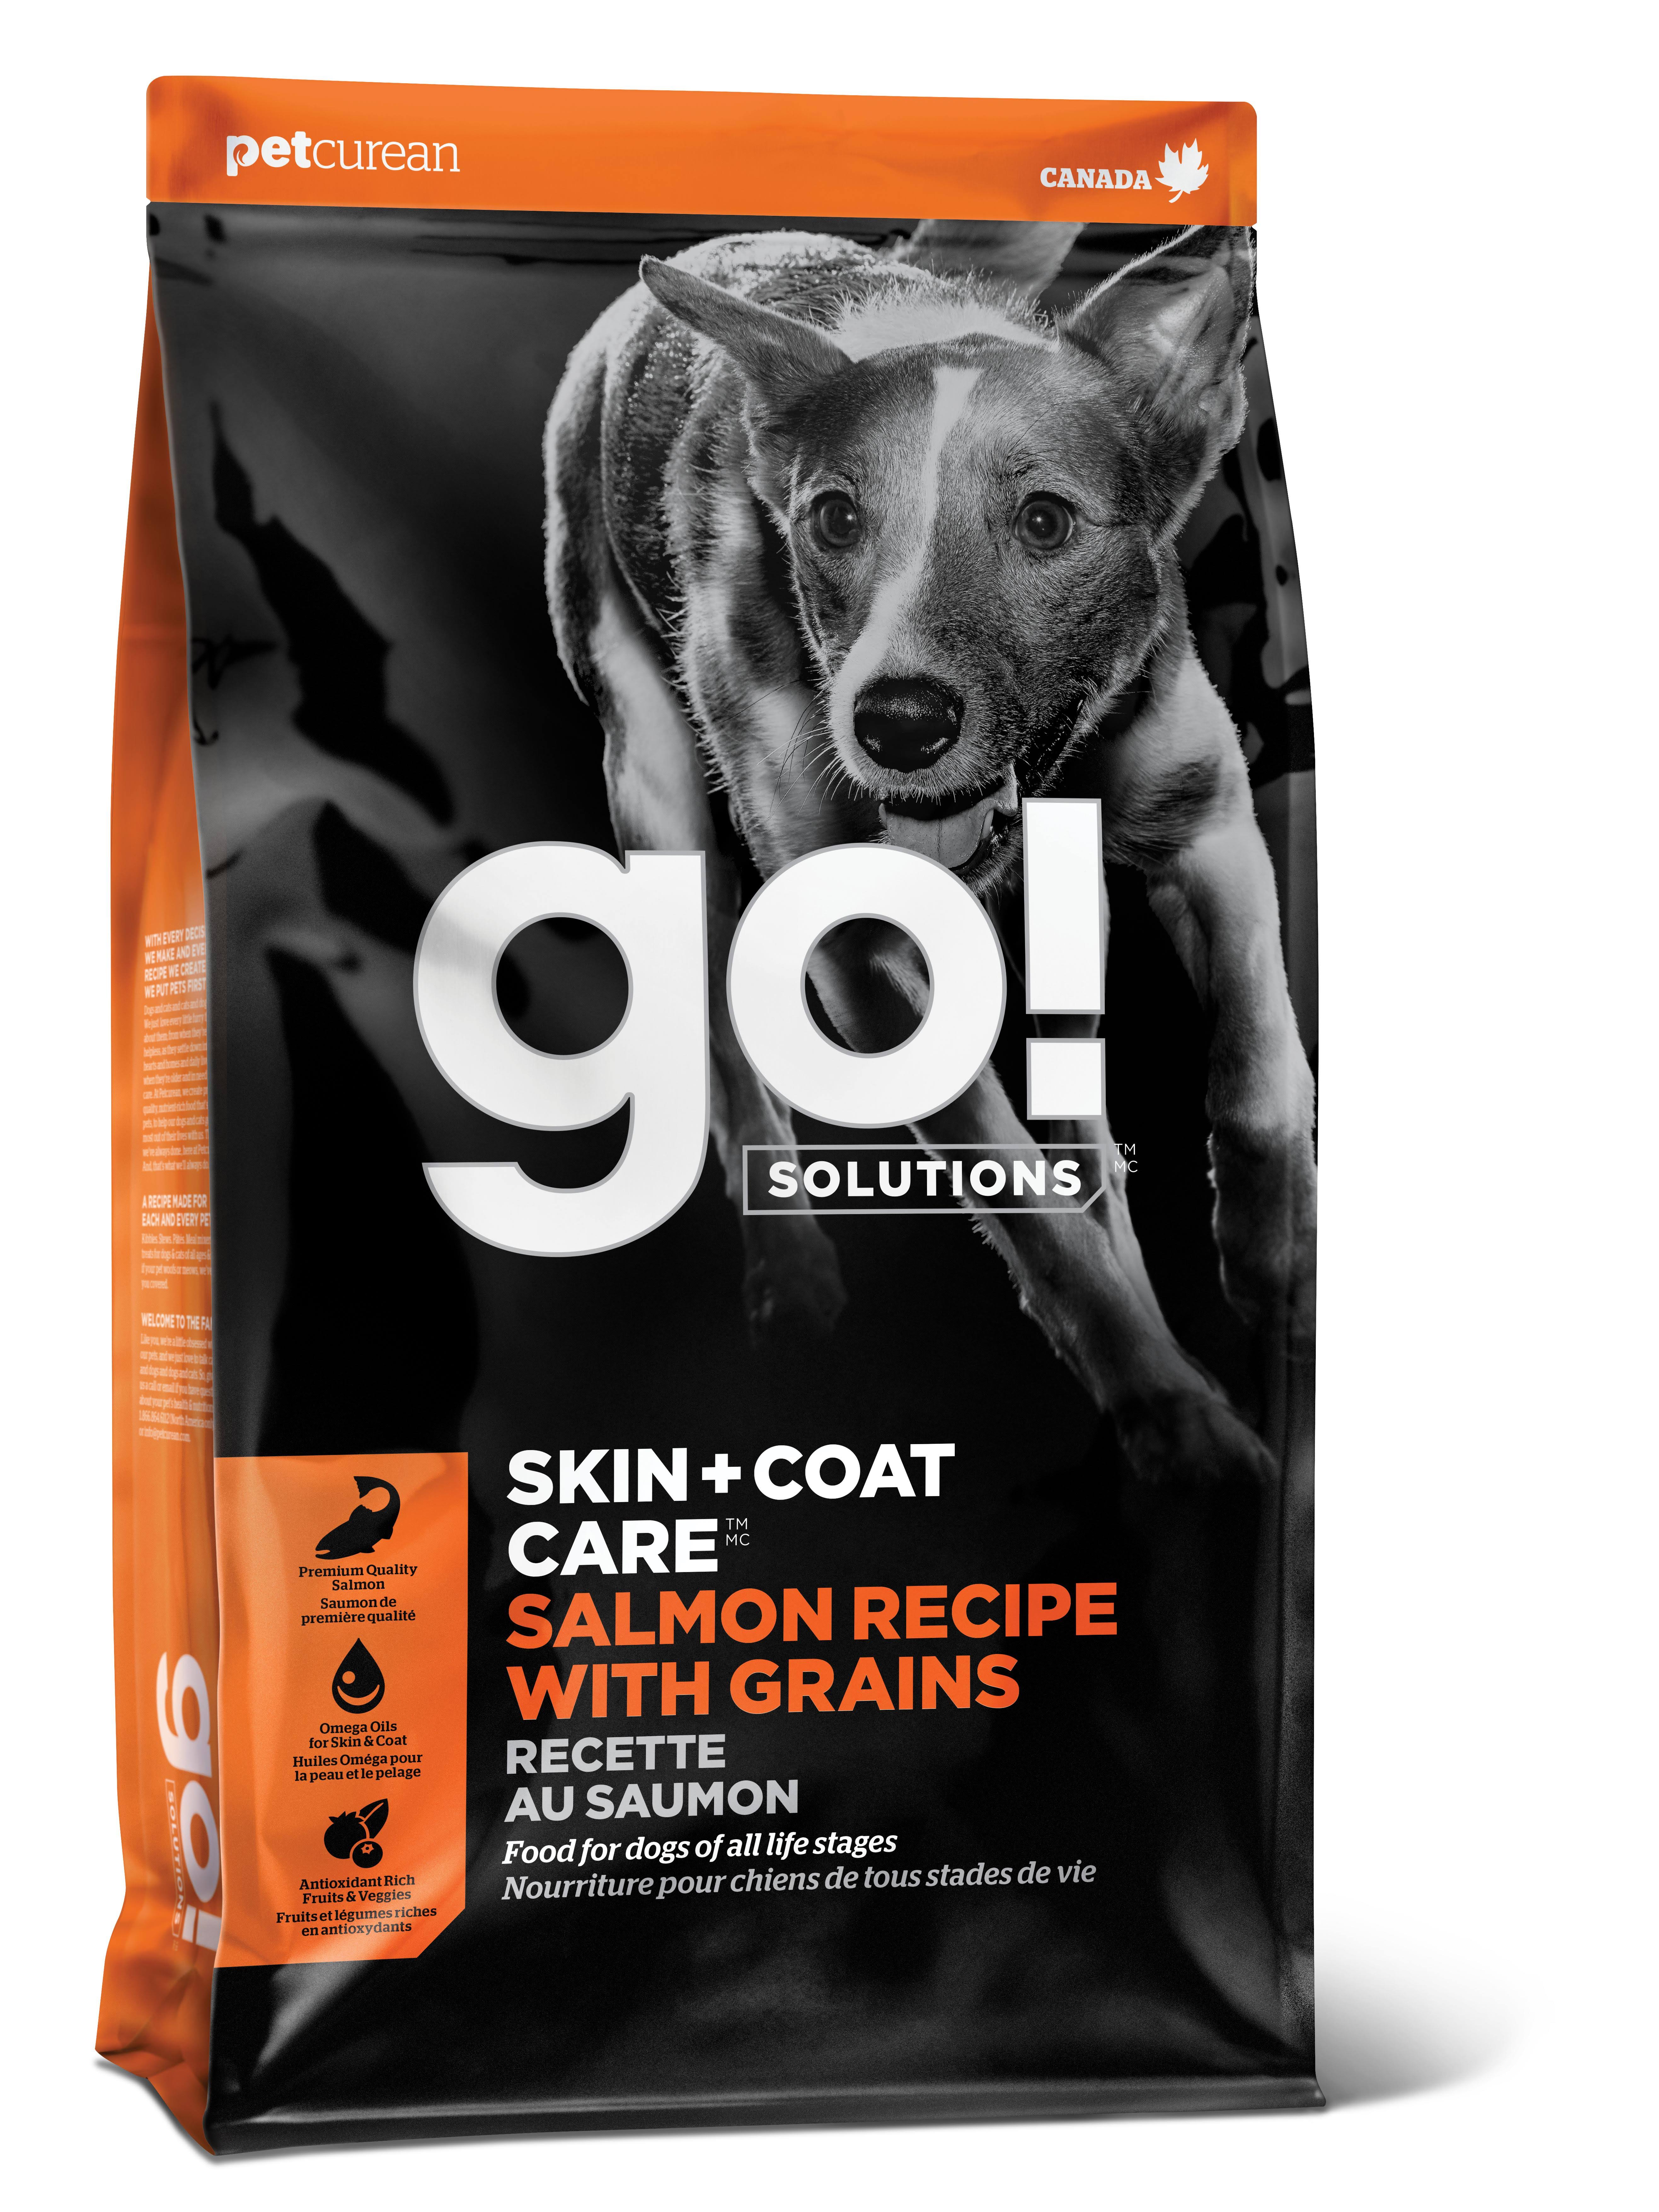 Go! Solutions Skin + Coat Care Salmon Dog Food [25lb]